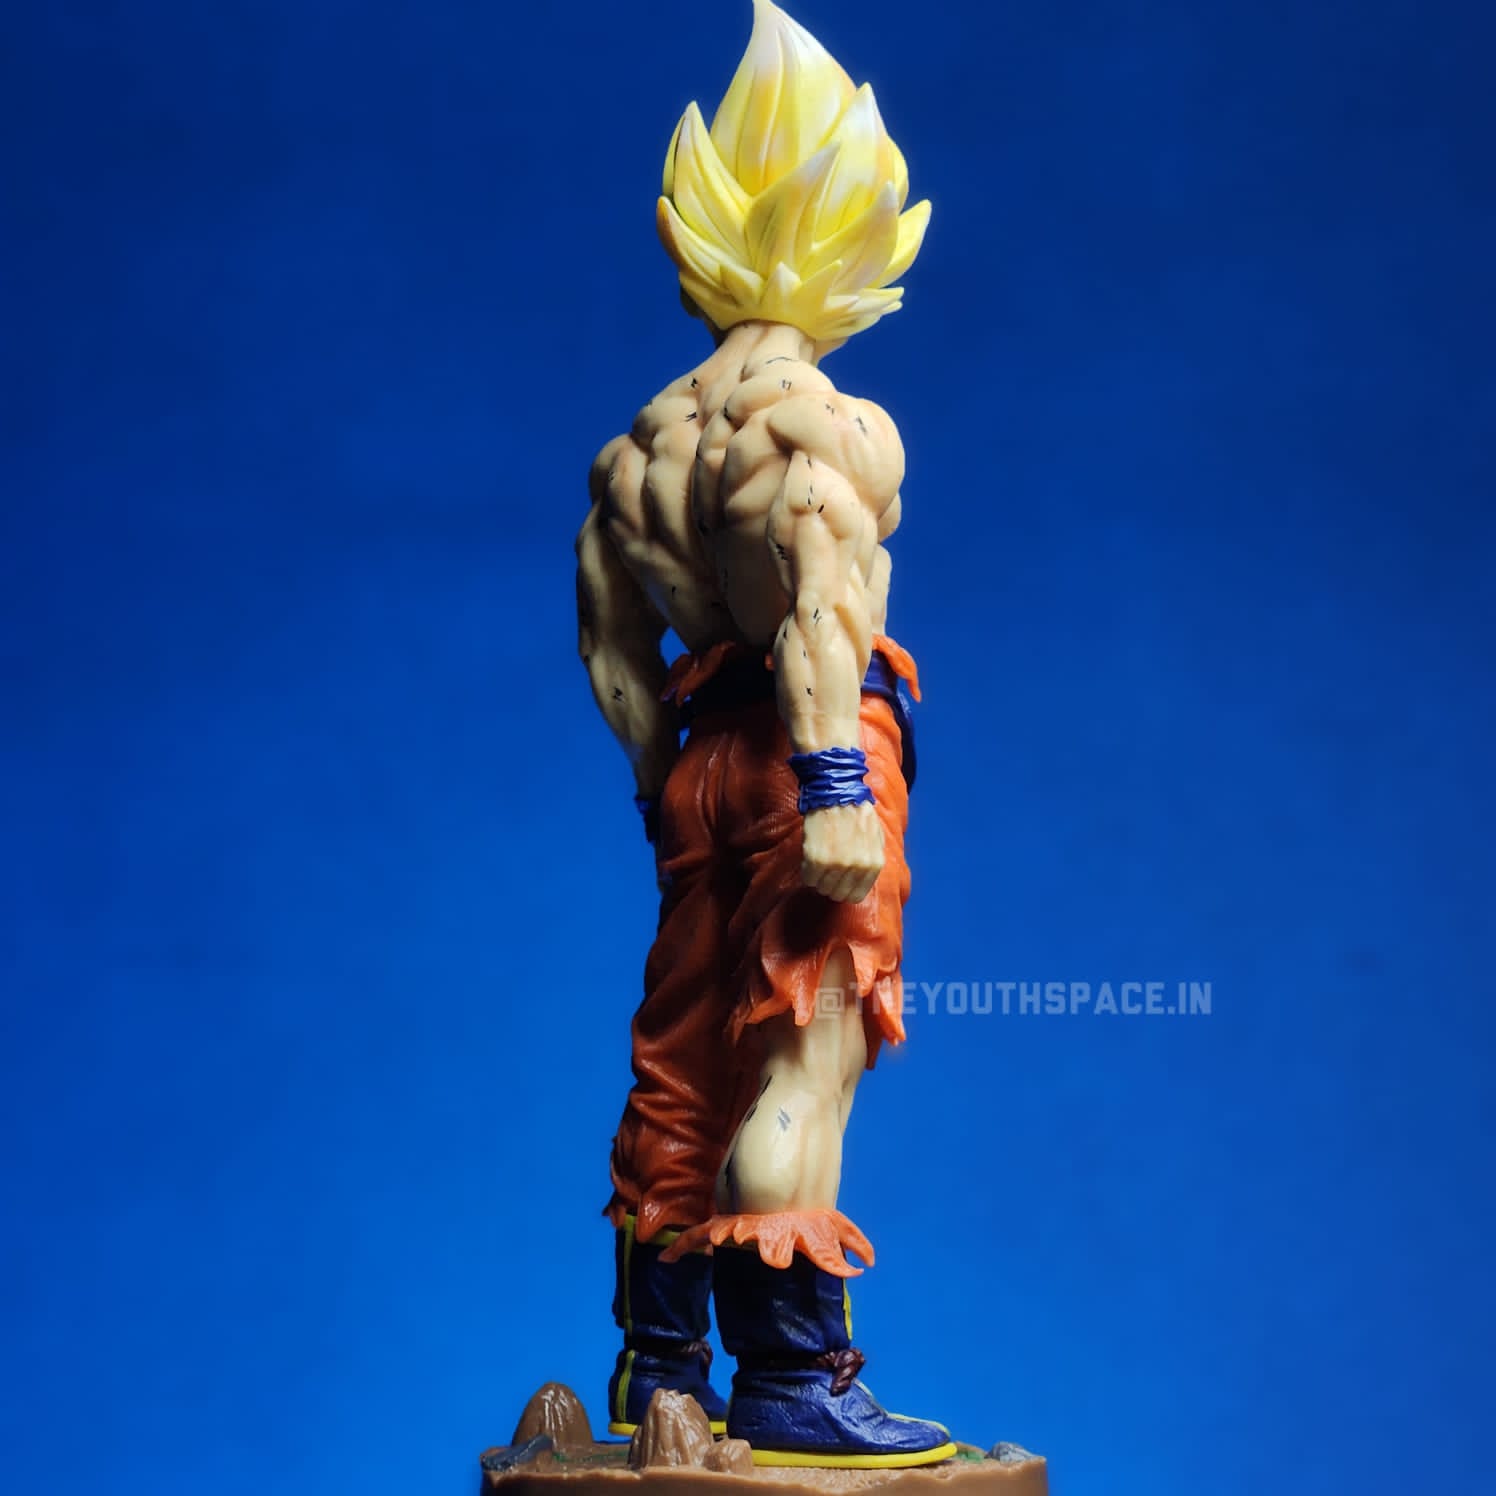 28-43CM Dragon Ball Z Son Goku Namek Figure Super Saiyan Goku Statue PVC  Action Figures Collection Model Toys Gifts